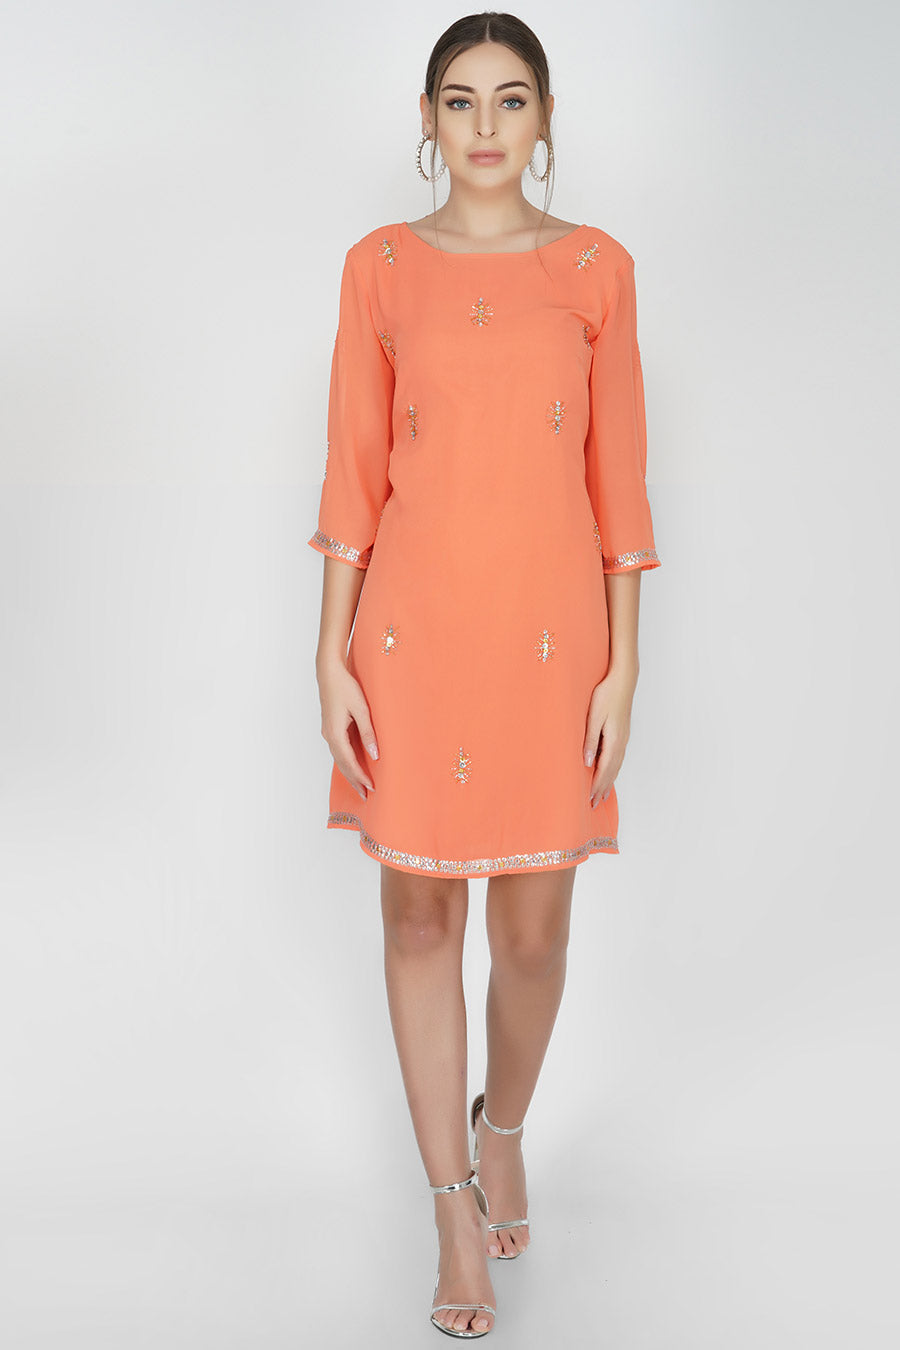 Tangerine Constellation Dress